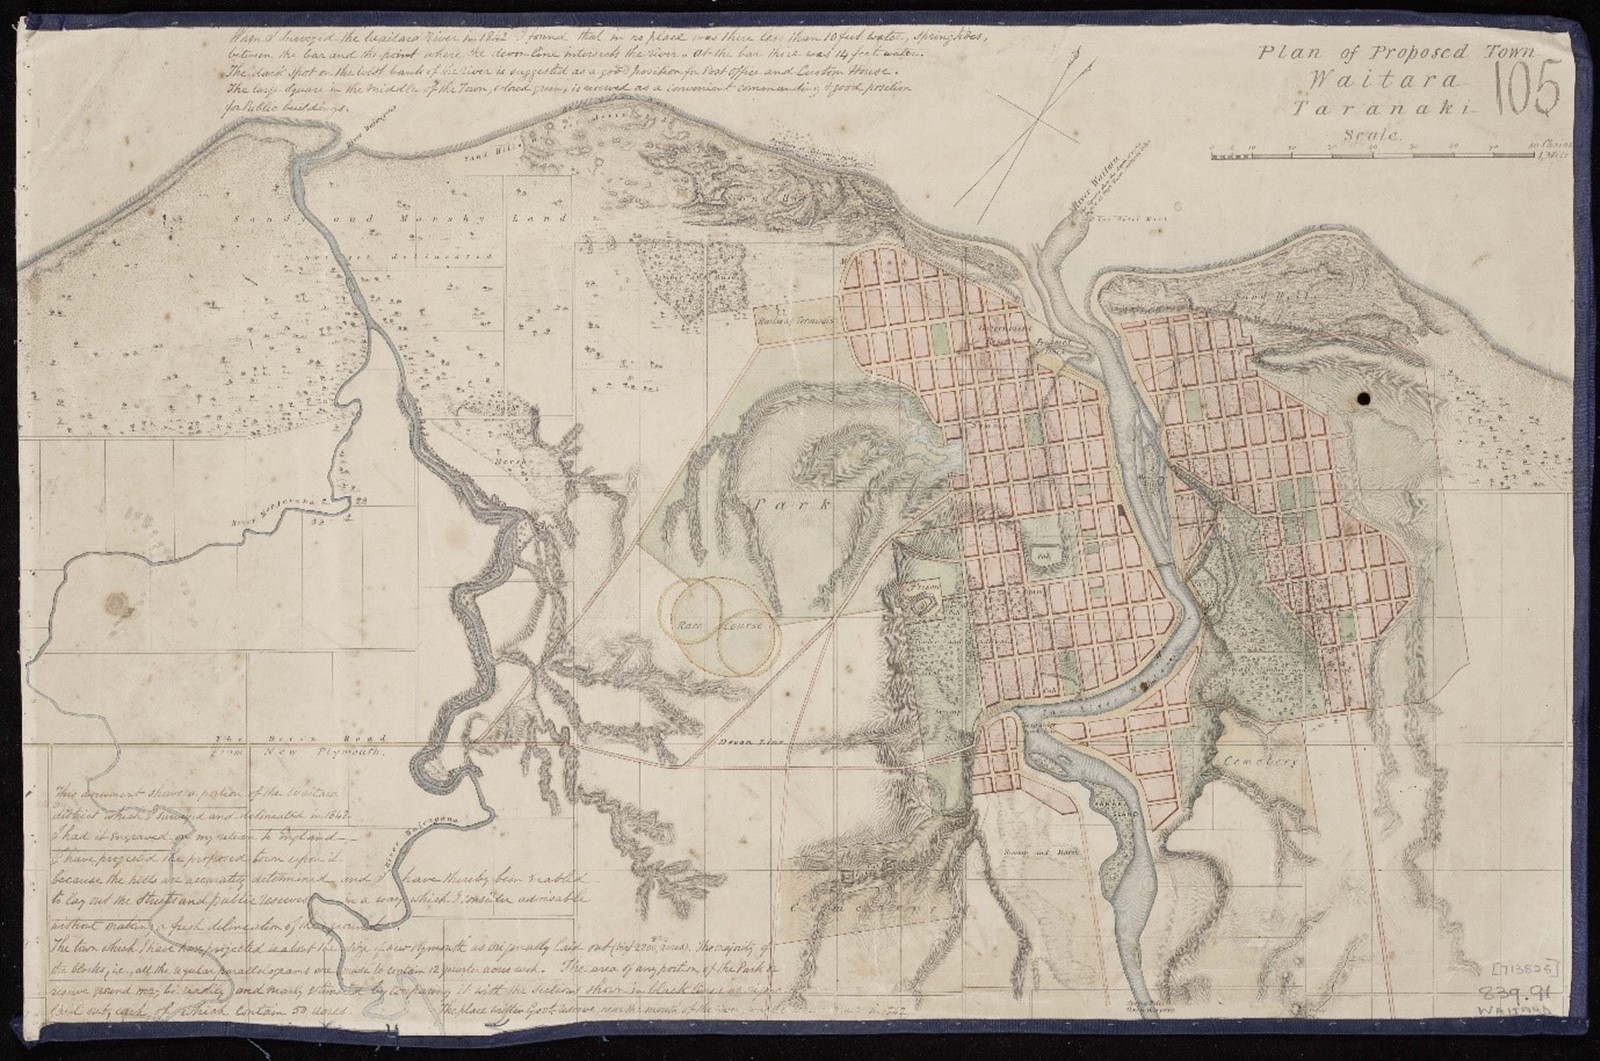 Map of Waitara from 1842